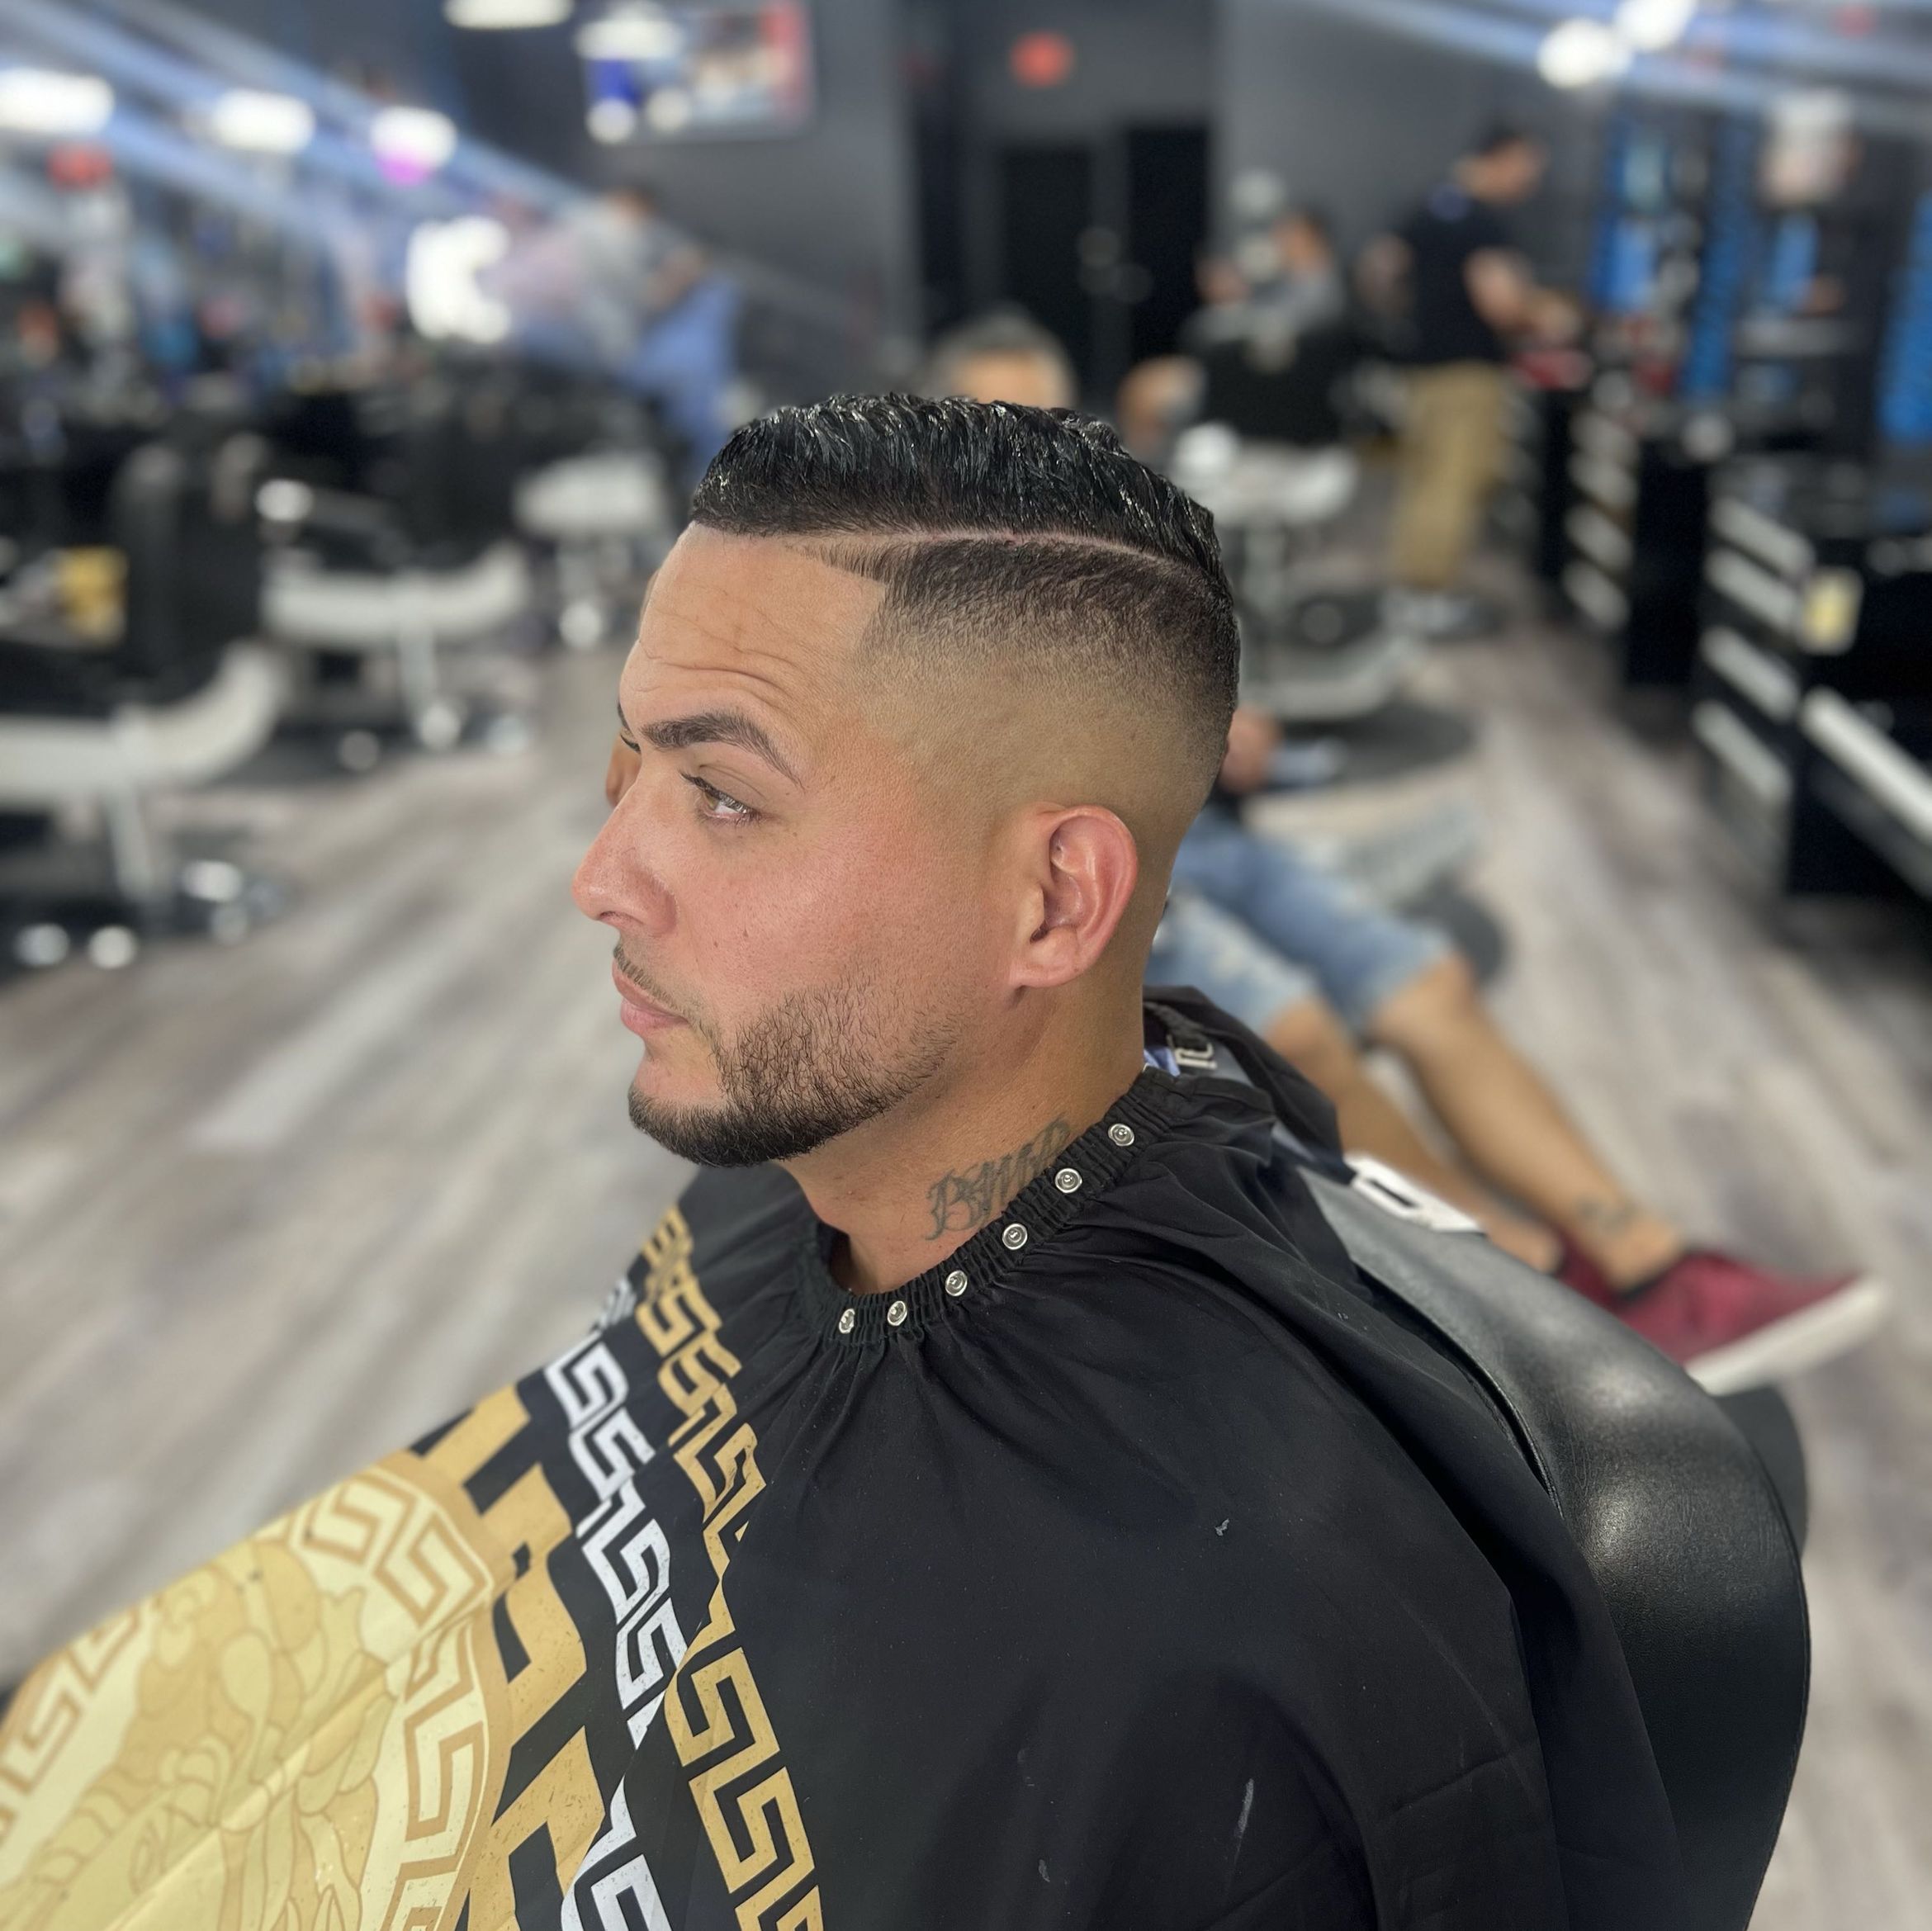 Kim’s Royal Cuts barbershop, 4211 Mariner blvd, Spring Hill, 34608